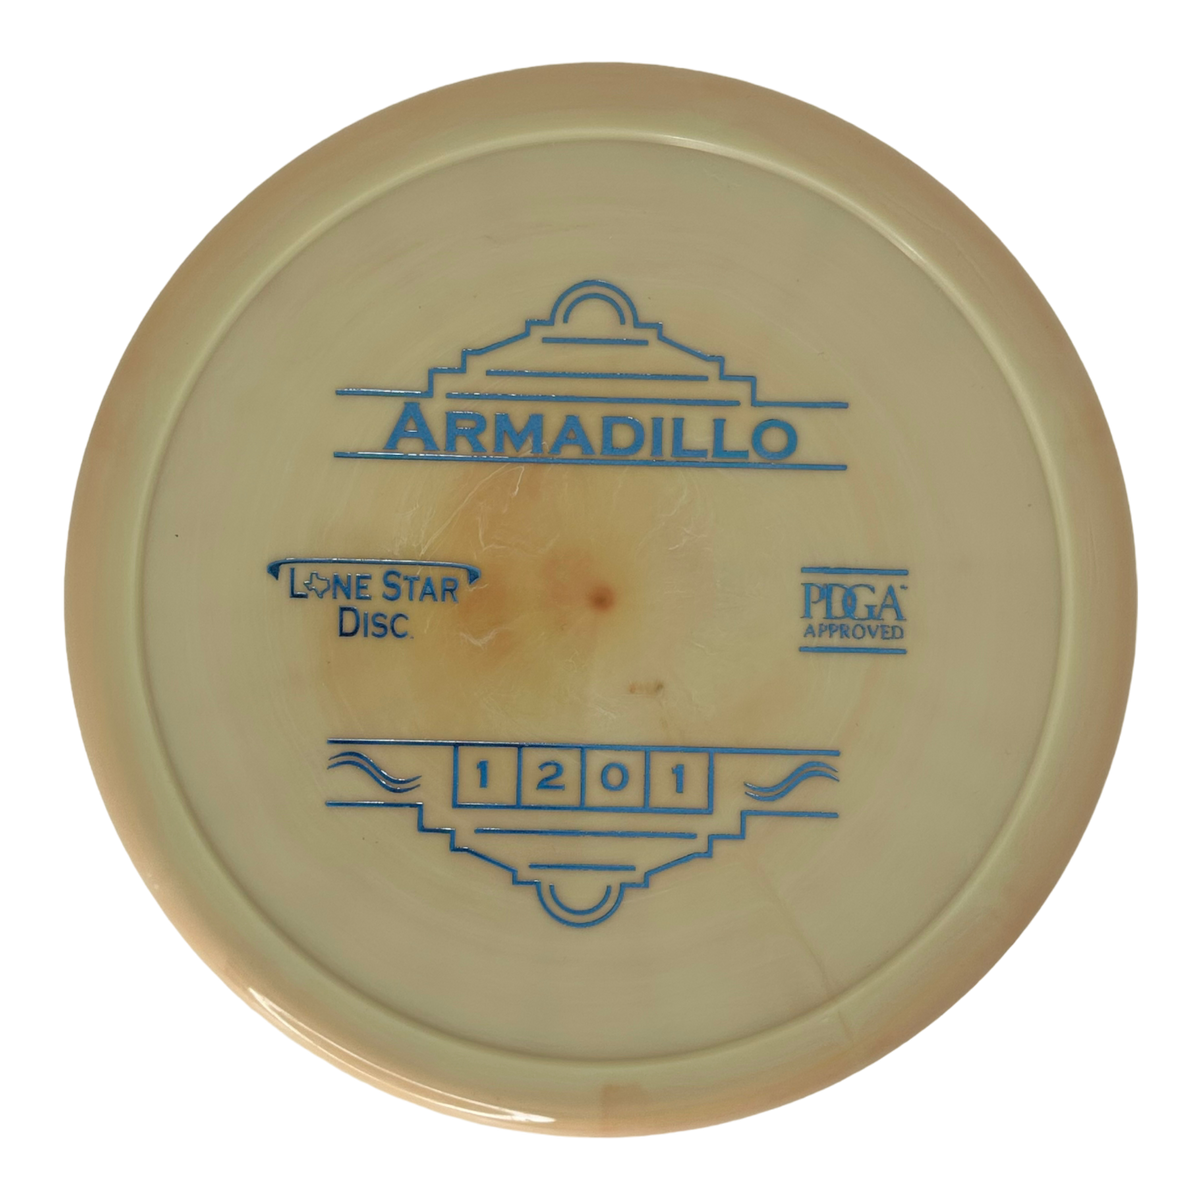 Lone Star Disc Bravo Armadillo